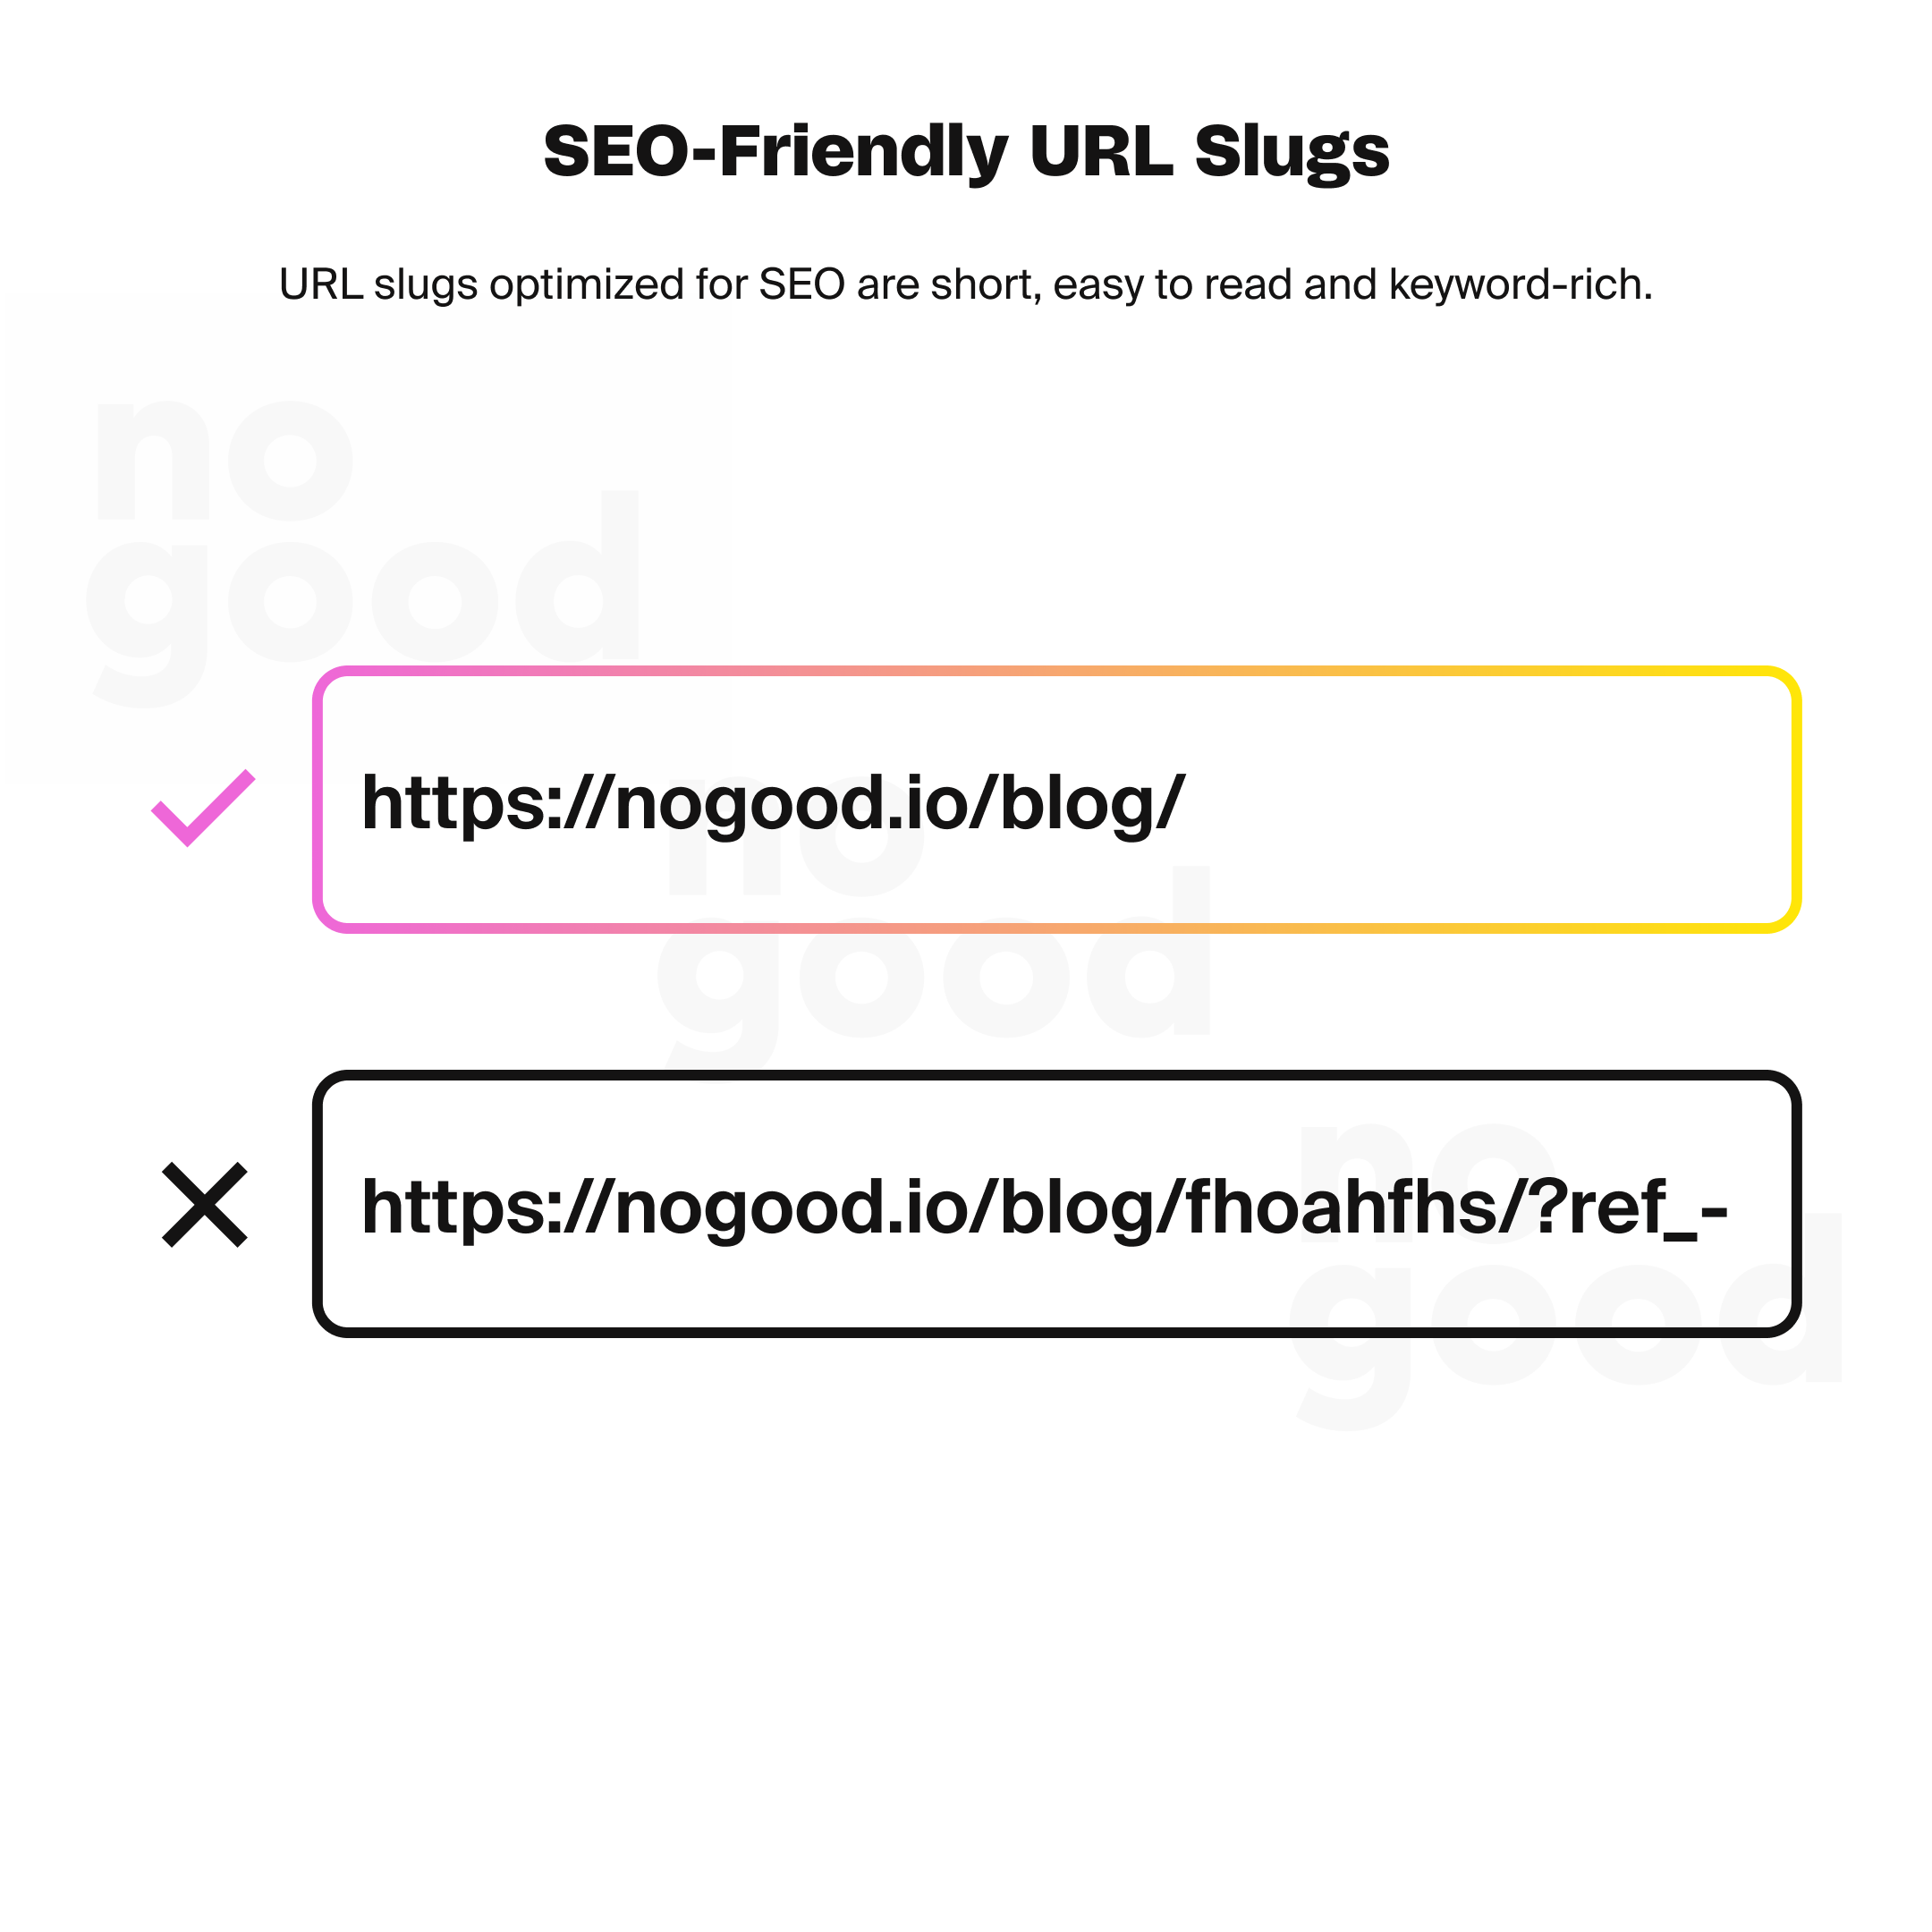 SEO-friendly URL slugs